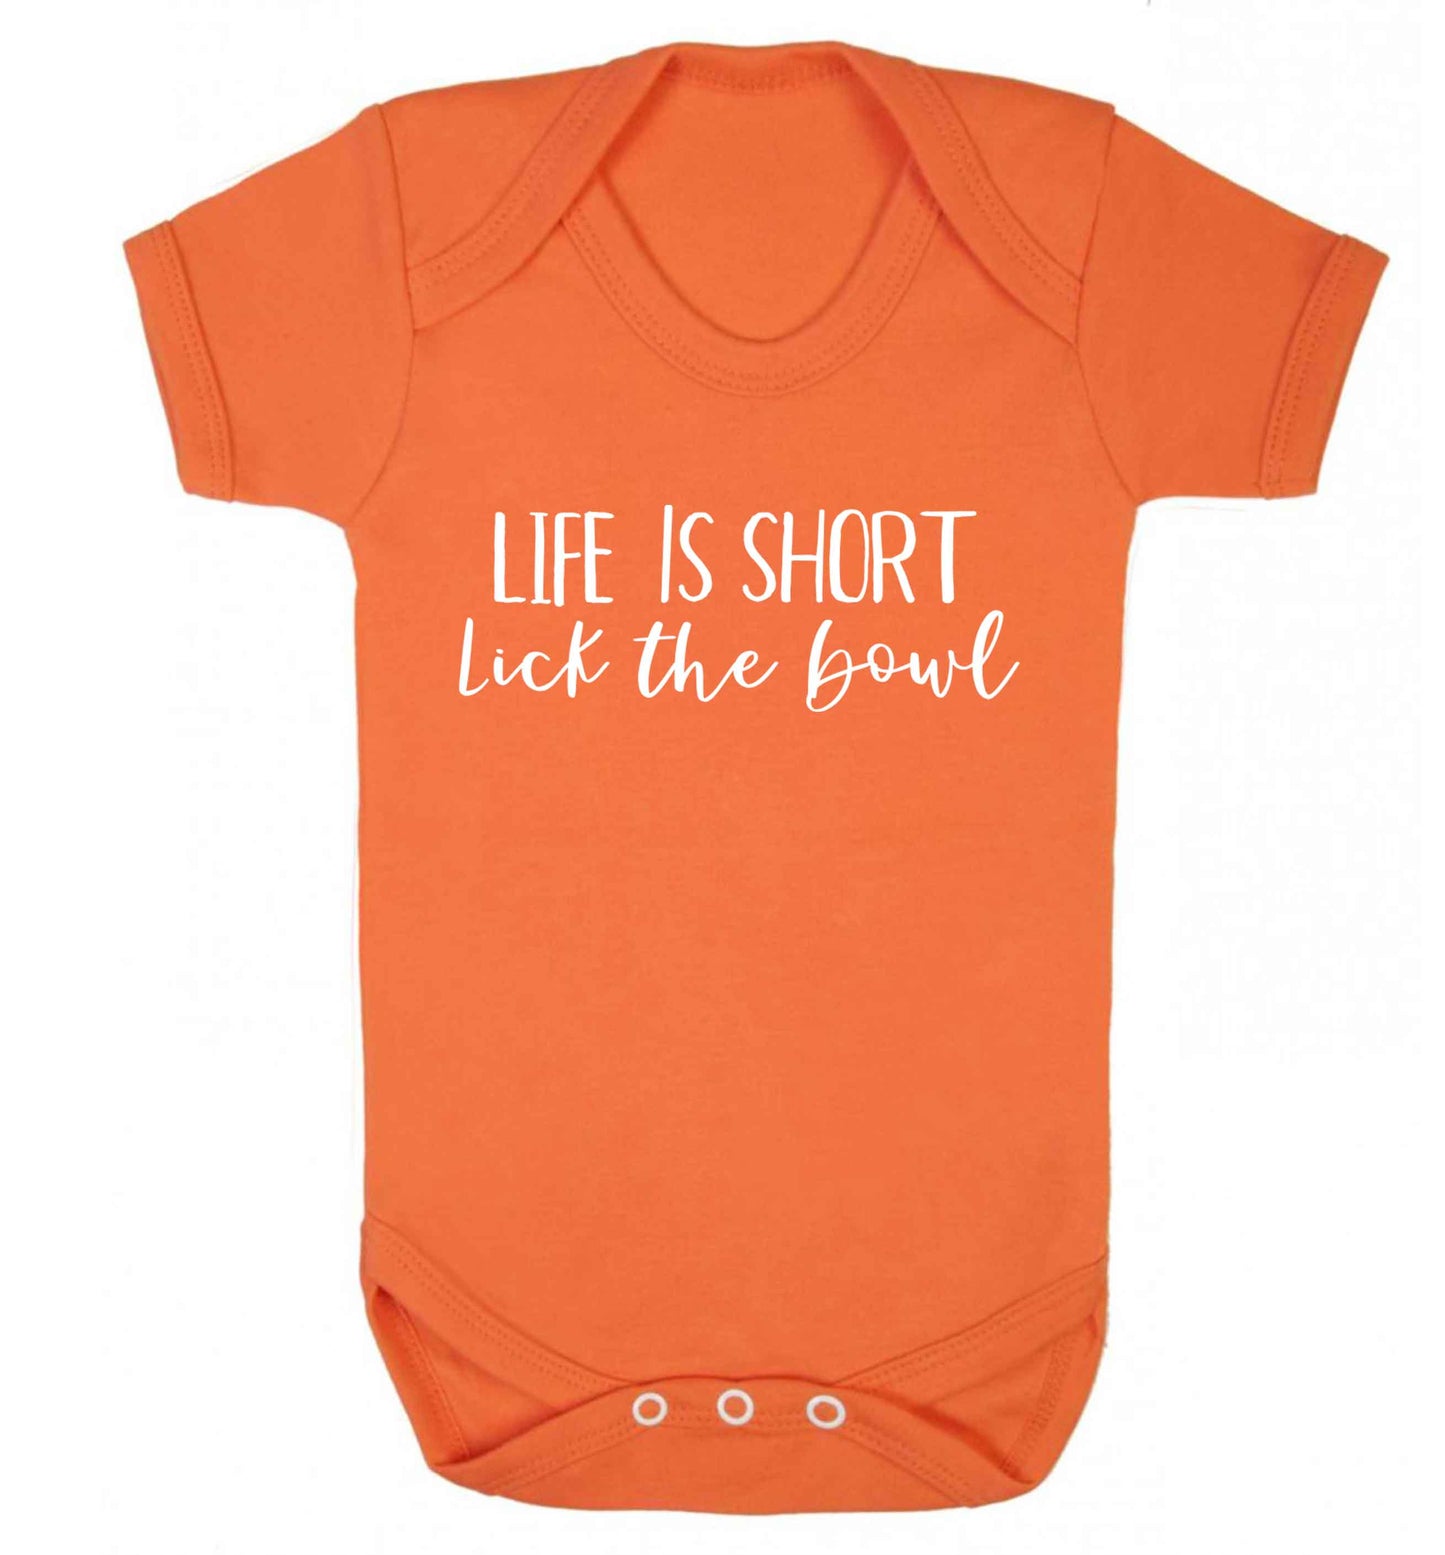 Life is short lick the bowl Baby Vest orange 18-24 months